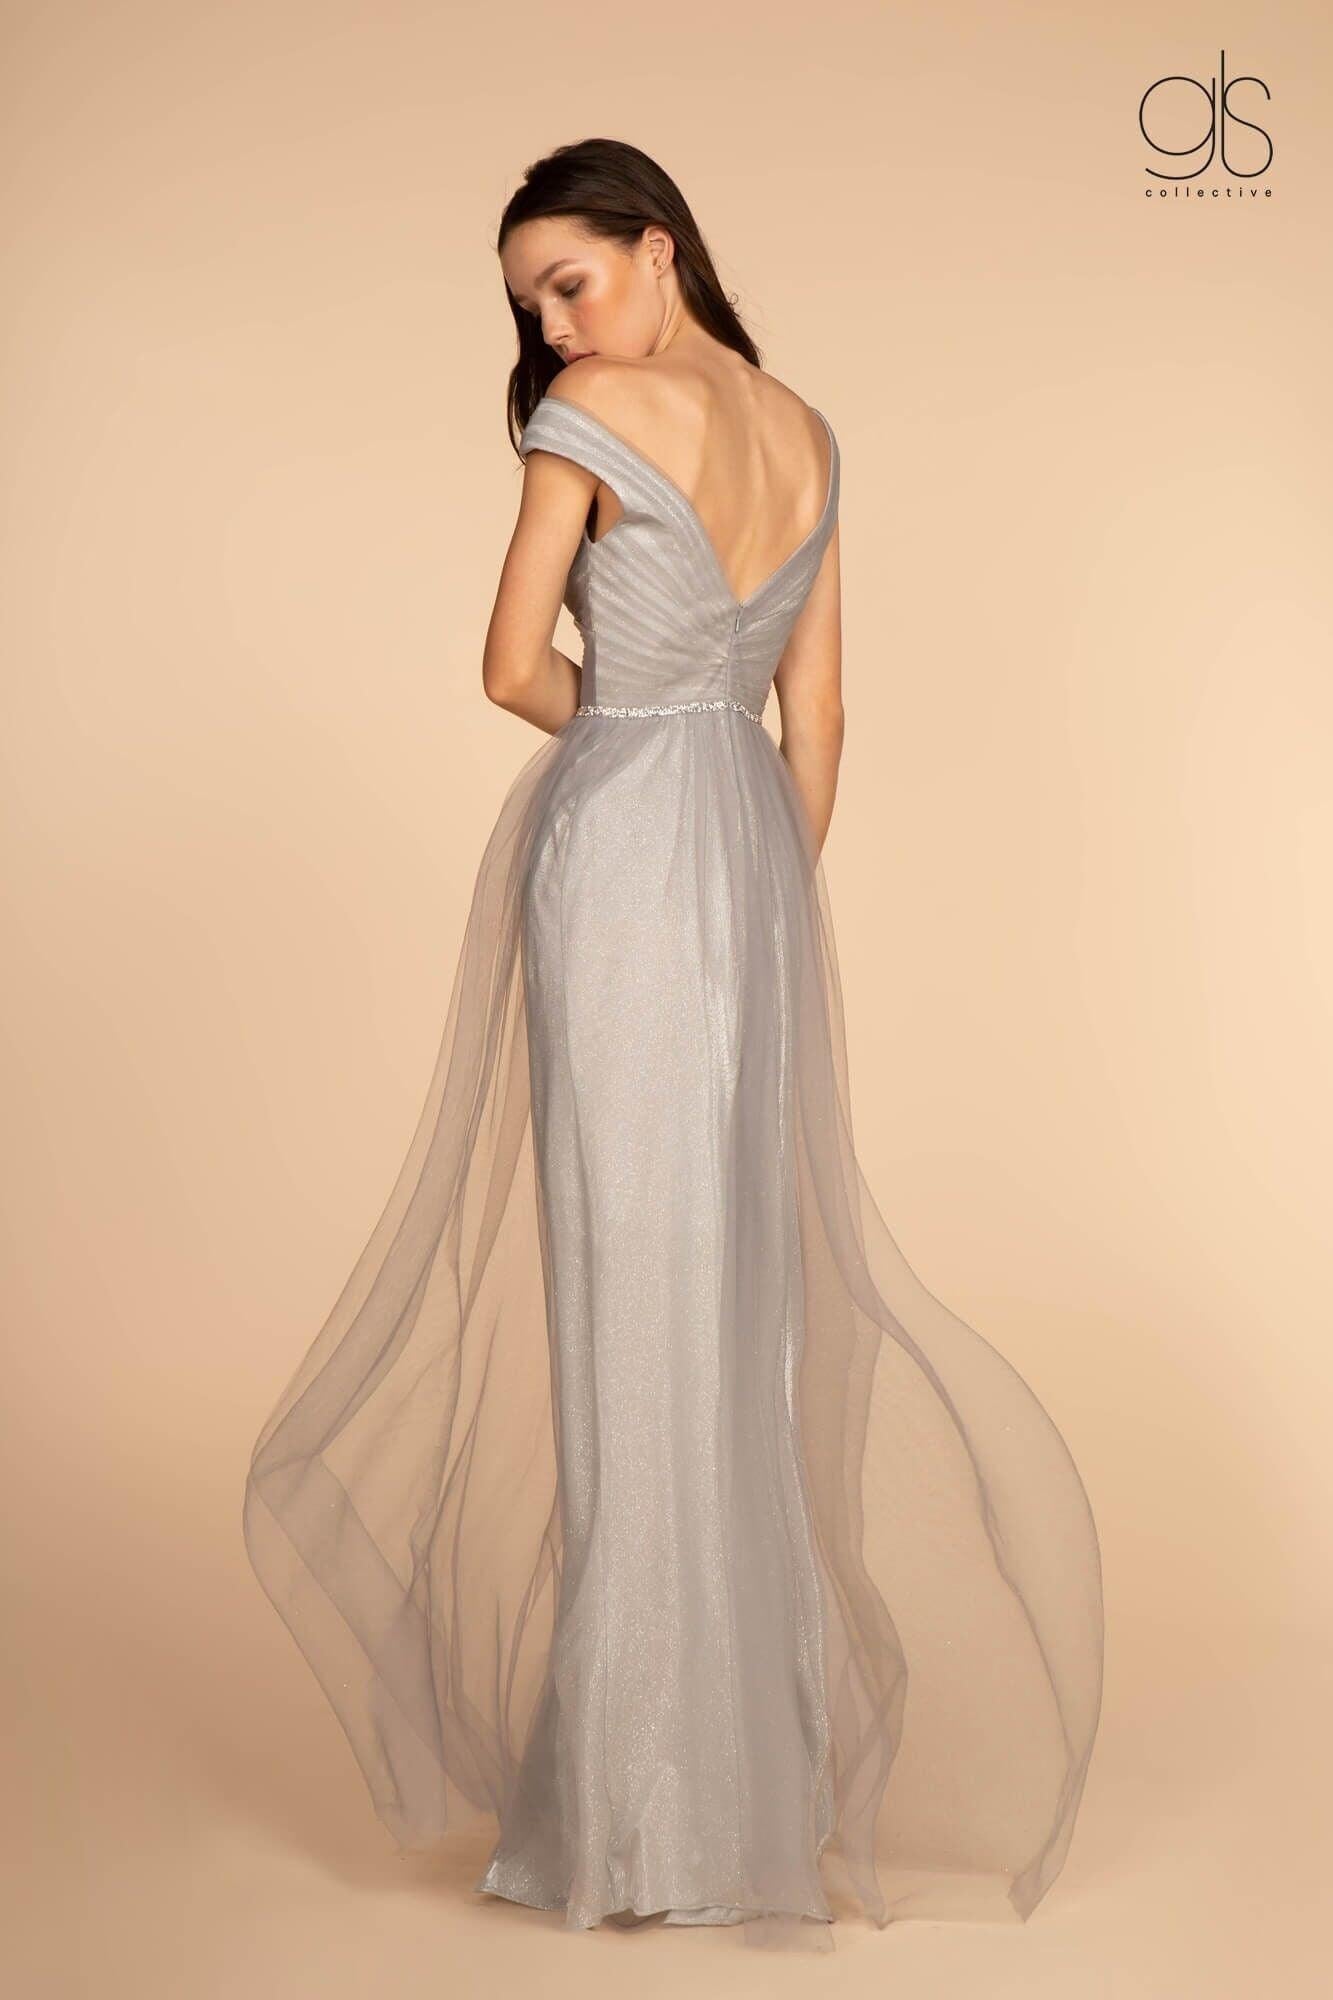 Long  Sleeveless Ball Gown Prom Formal Dress - The Dress Outlet Elizabeth K